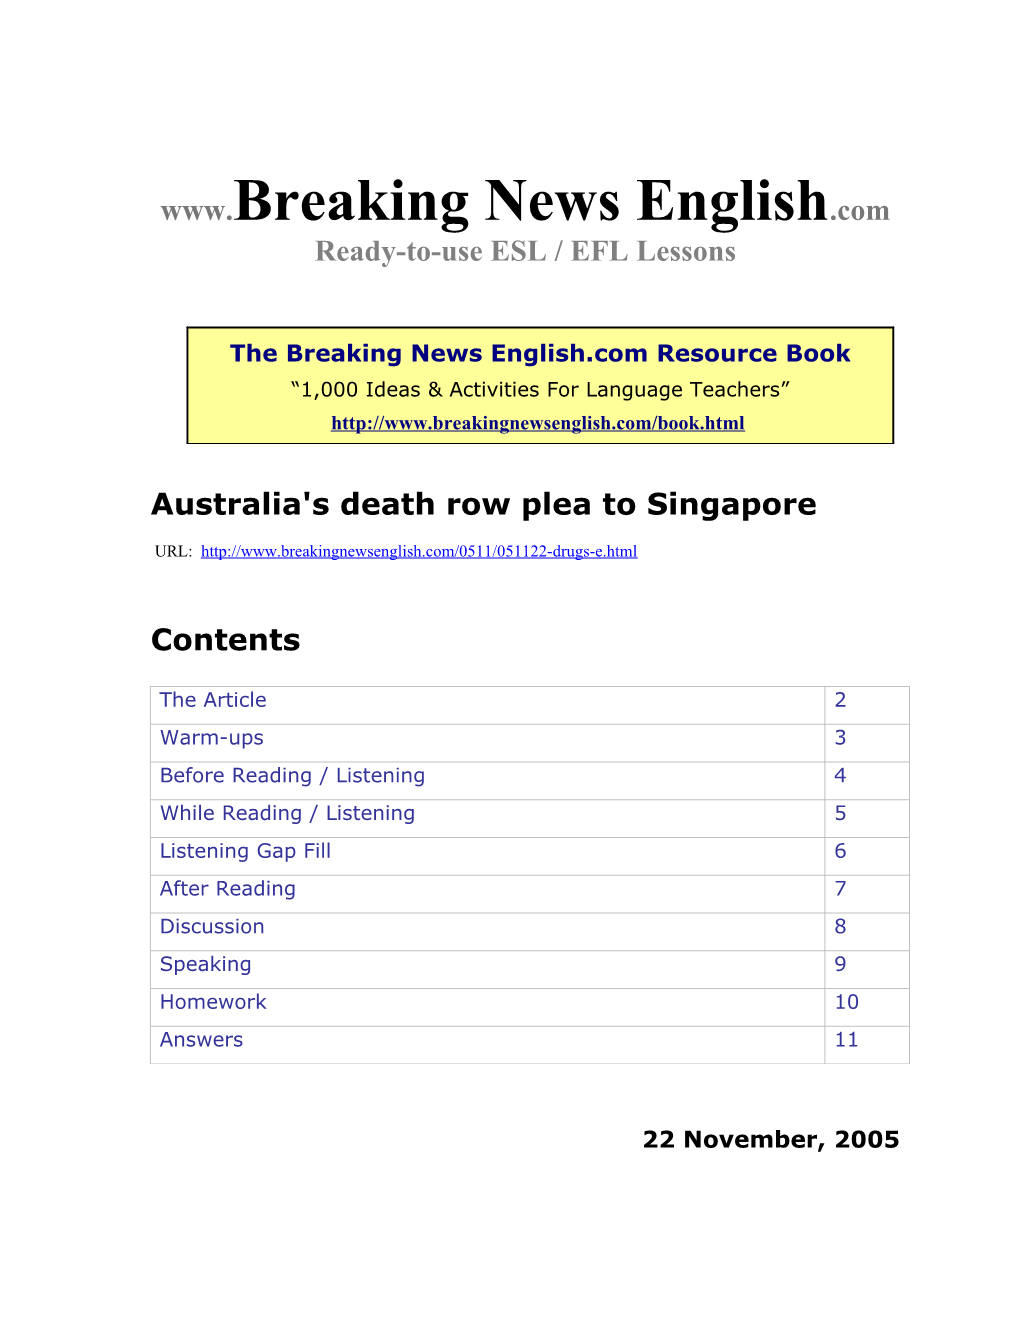 Australia's Death Row Plea to Singapore